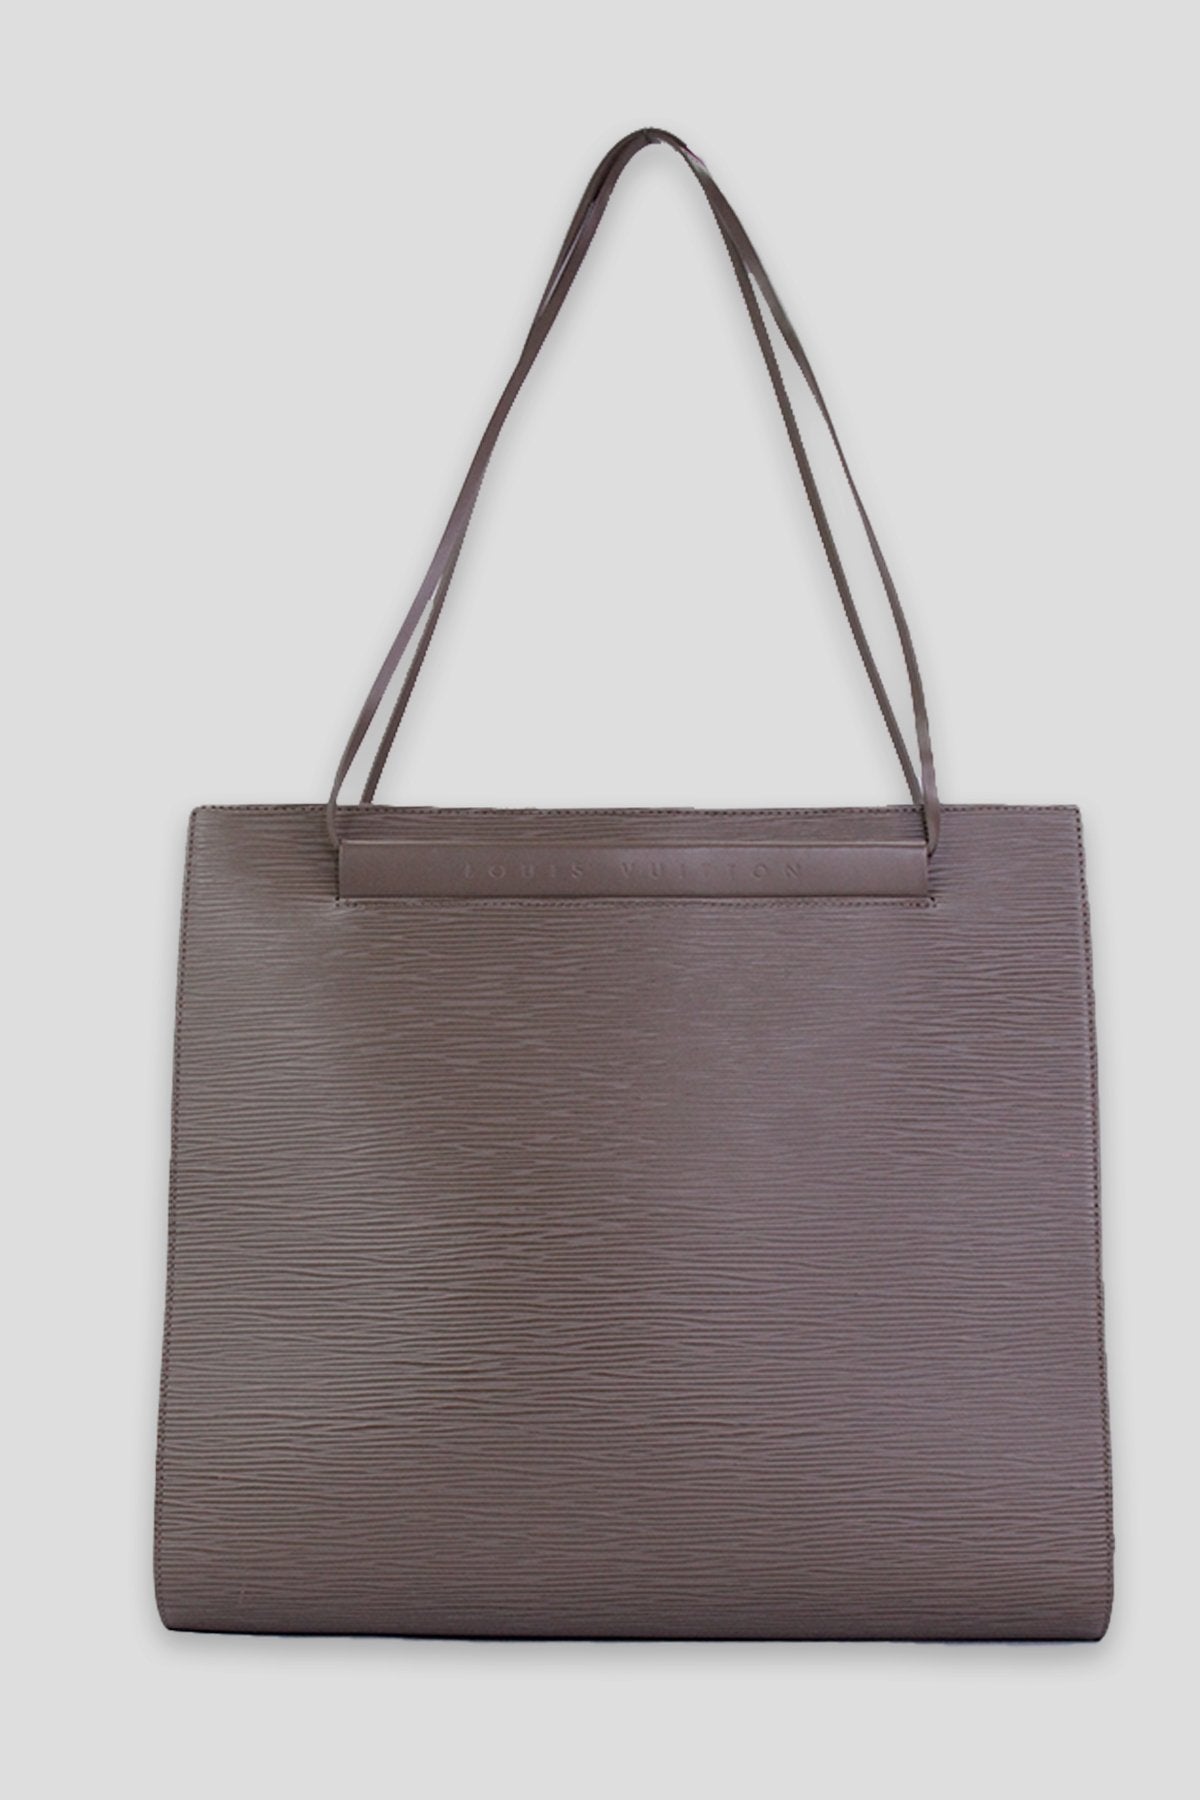 Louis Vuitton Taupe Epi Leather Handbag - shop-olivia.com